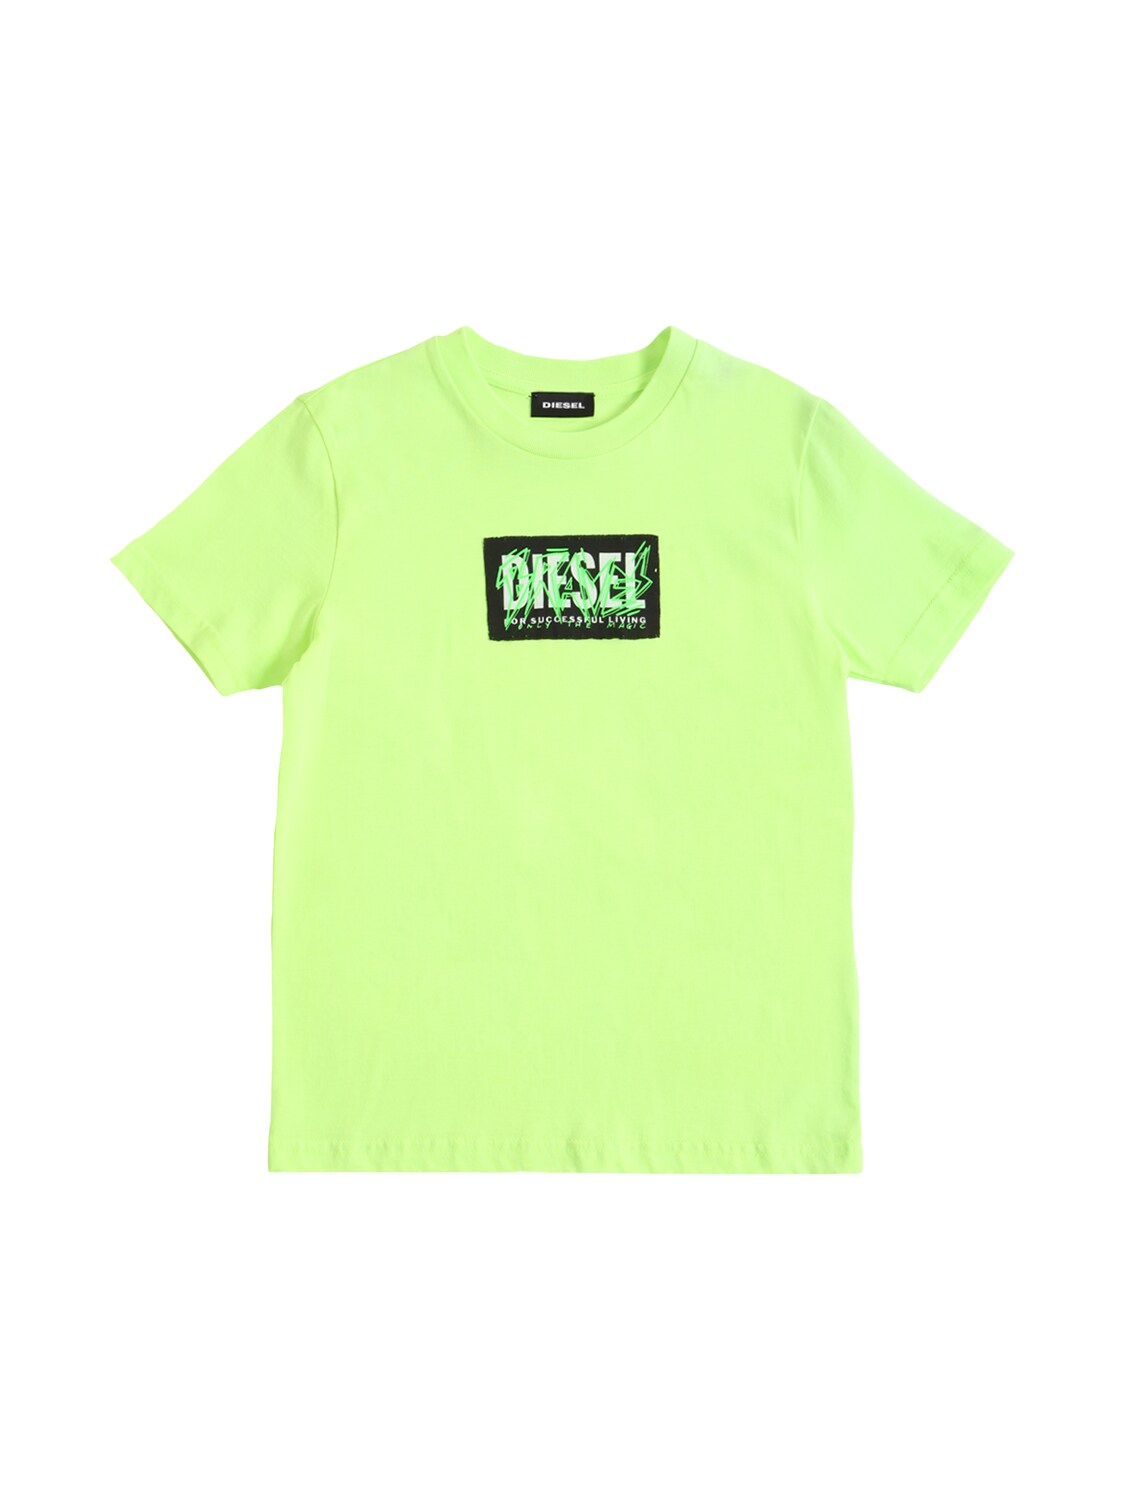 Diesel Kids' Printed Cotton Jersey T-shirt In Neon Green